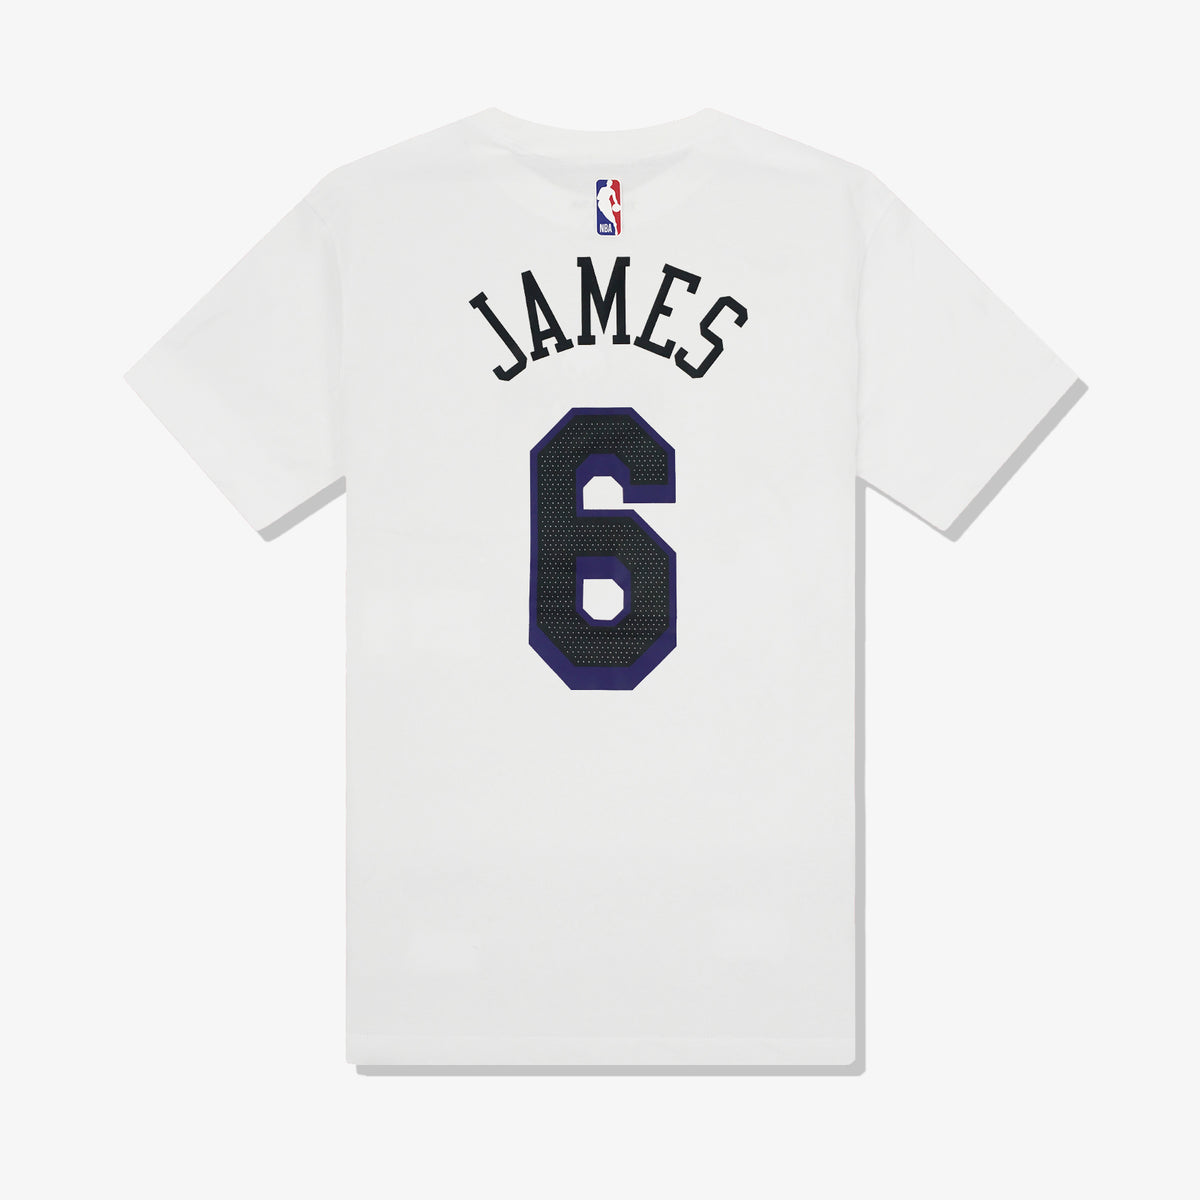 Nike NBA Lakers Lebron James Swingman Jersey Black Men's - SS23 - US